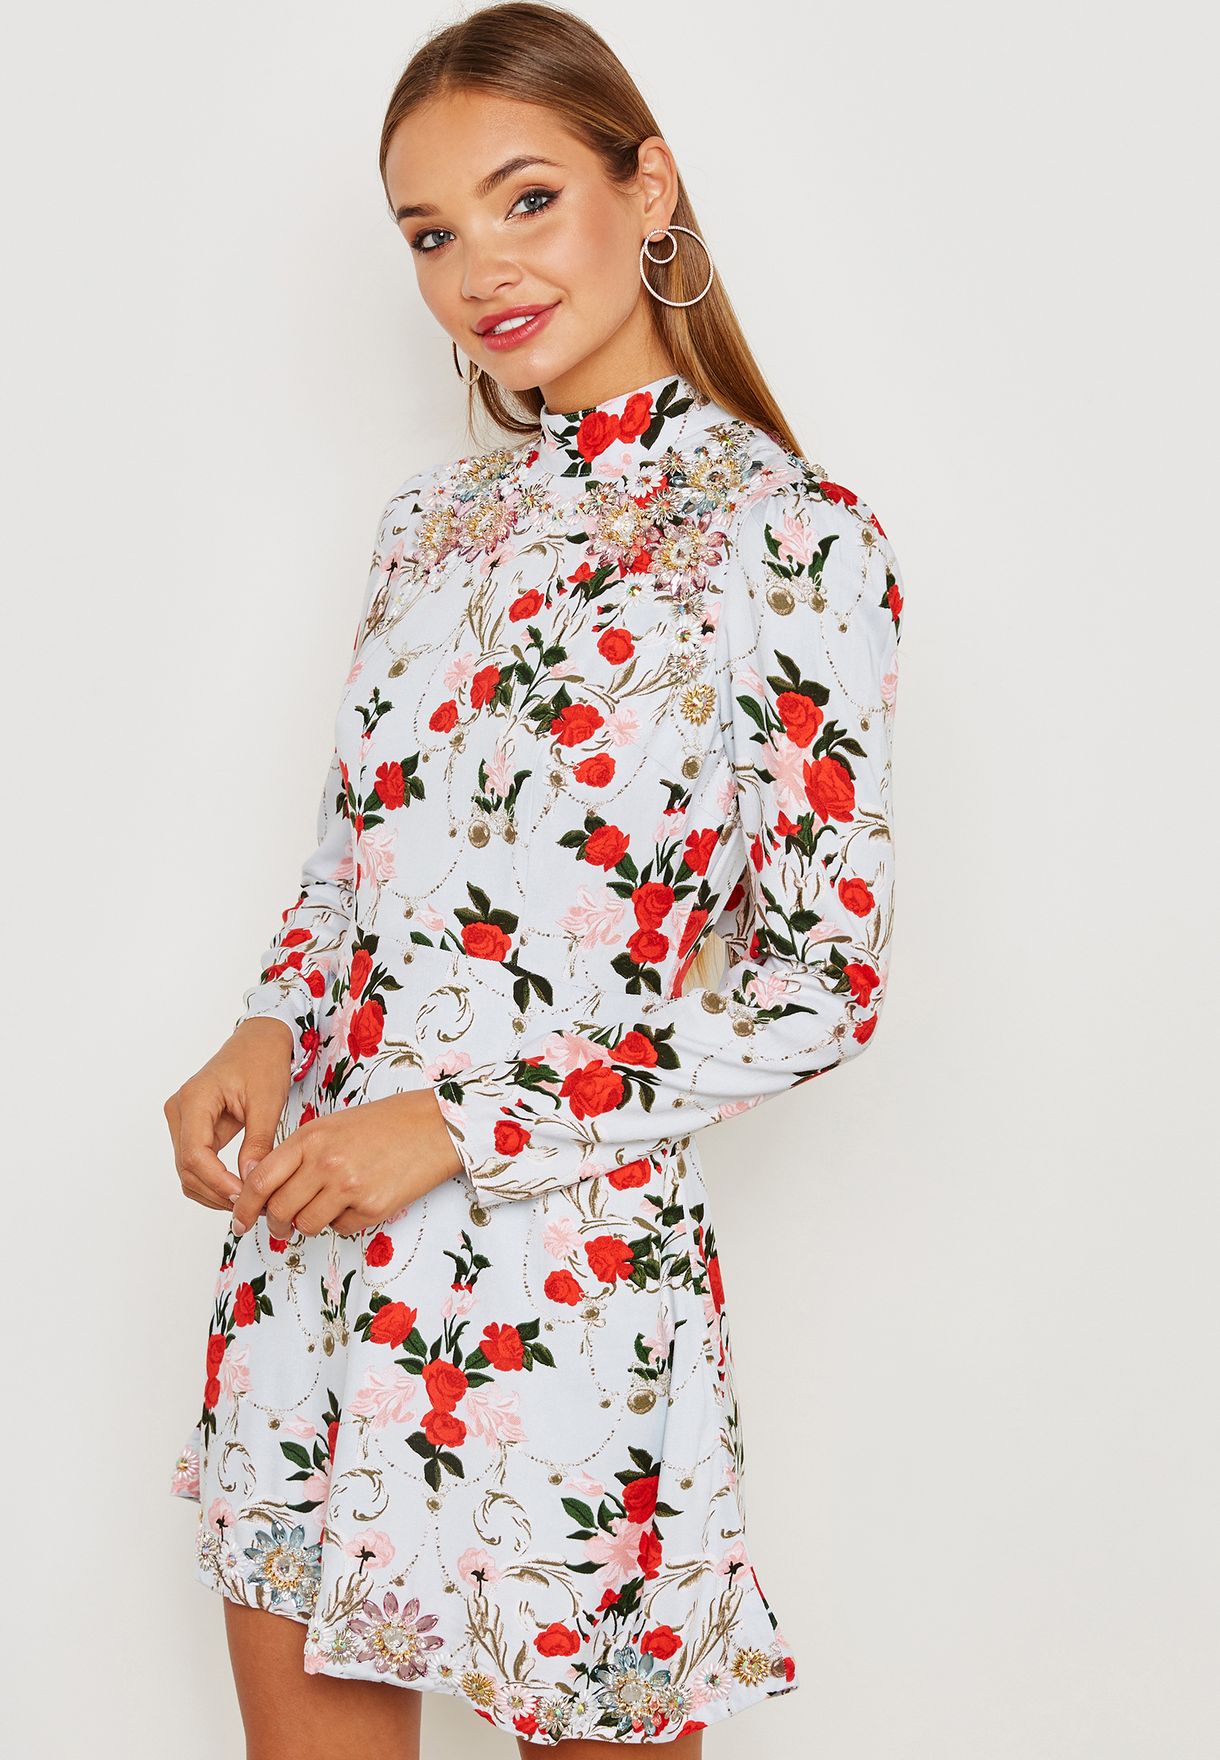 topshop rose print dress